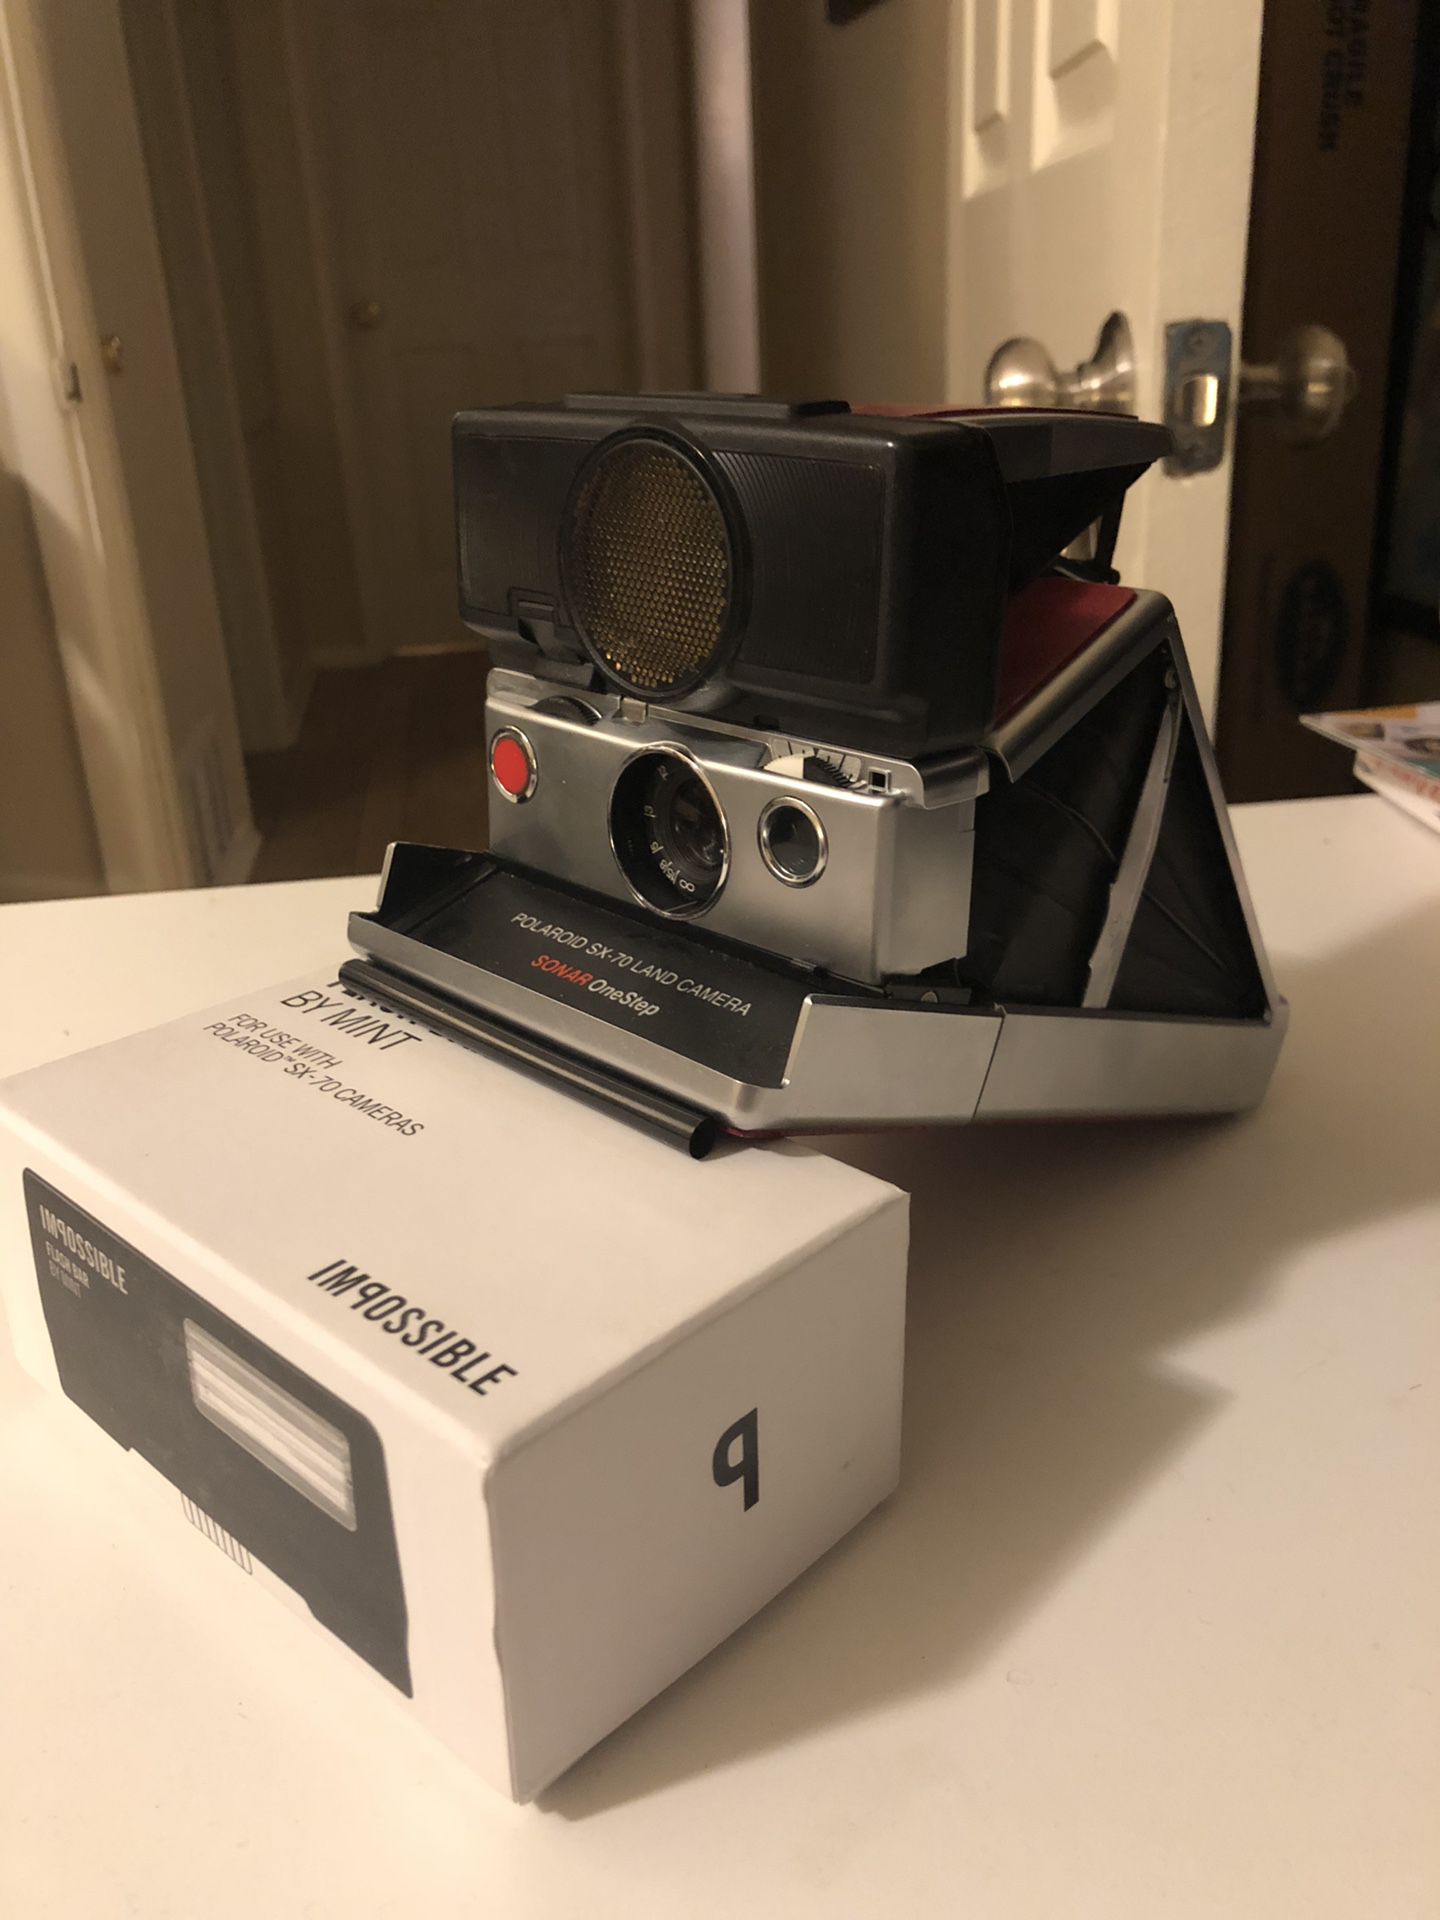 Polaroid SX-70 land camera with rangefinder focus and Flash Bar